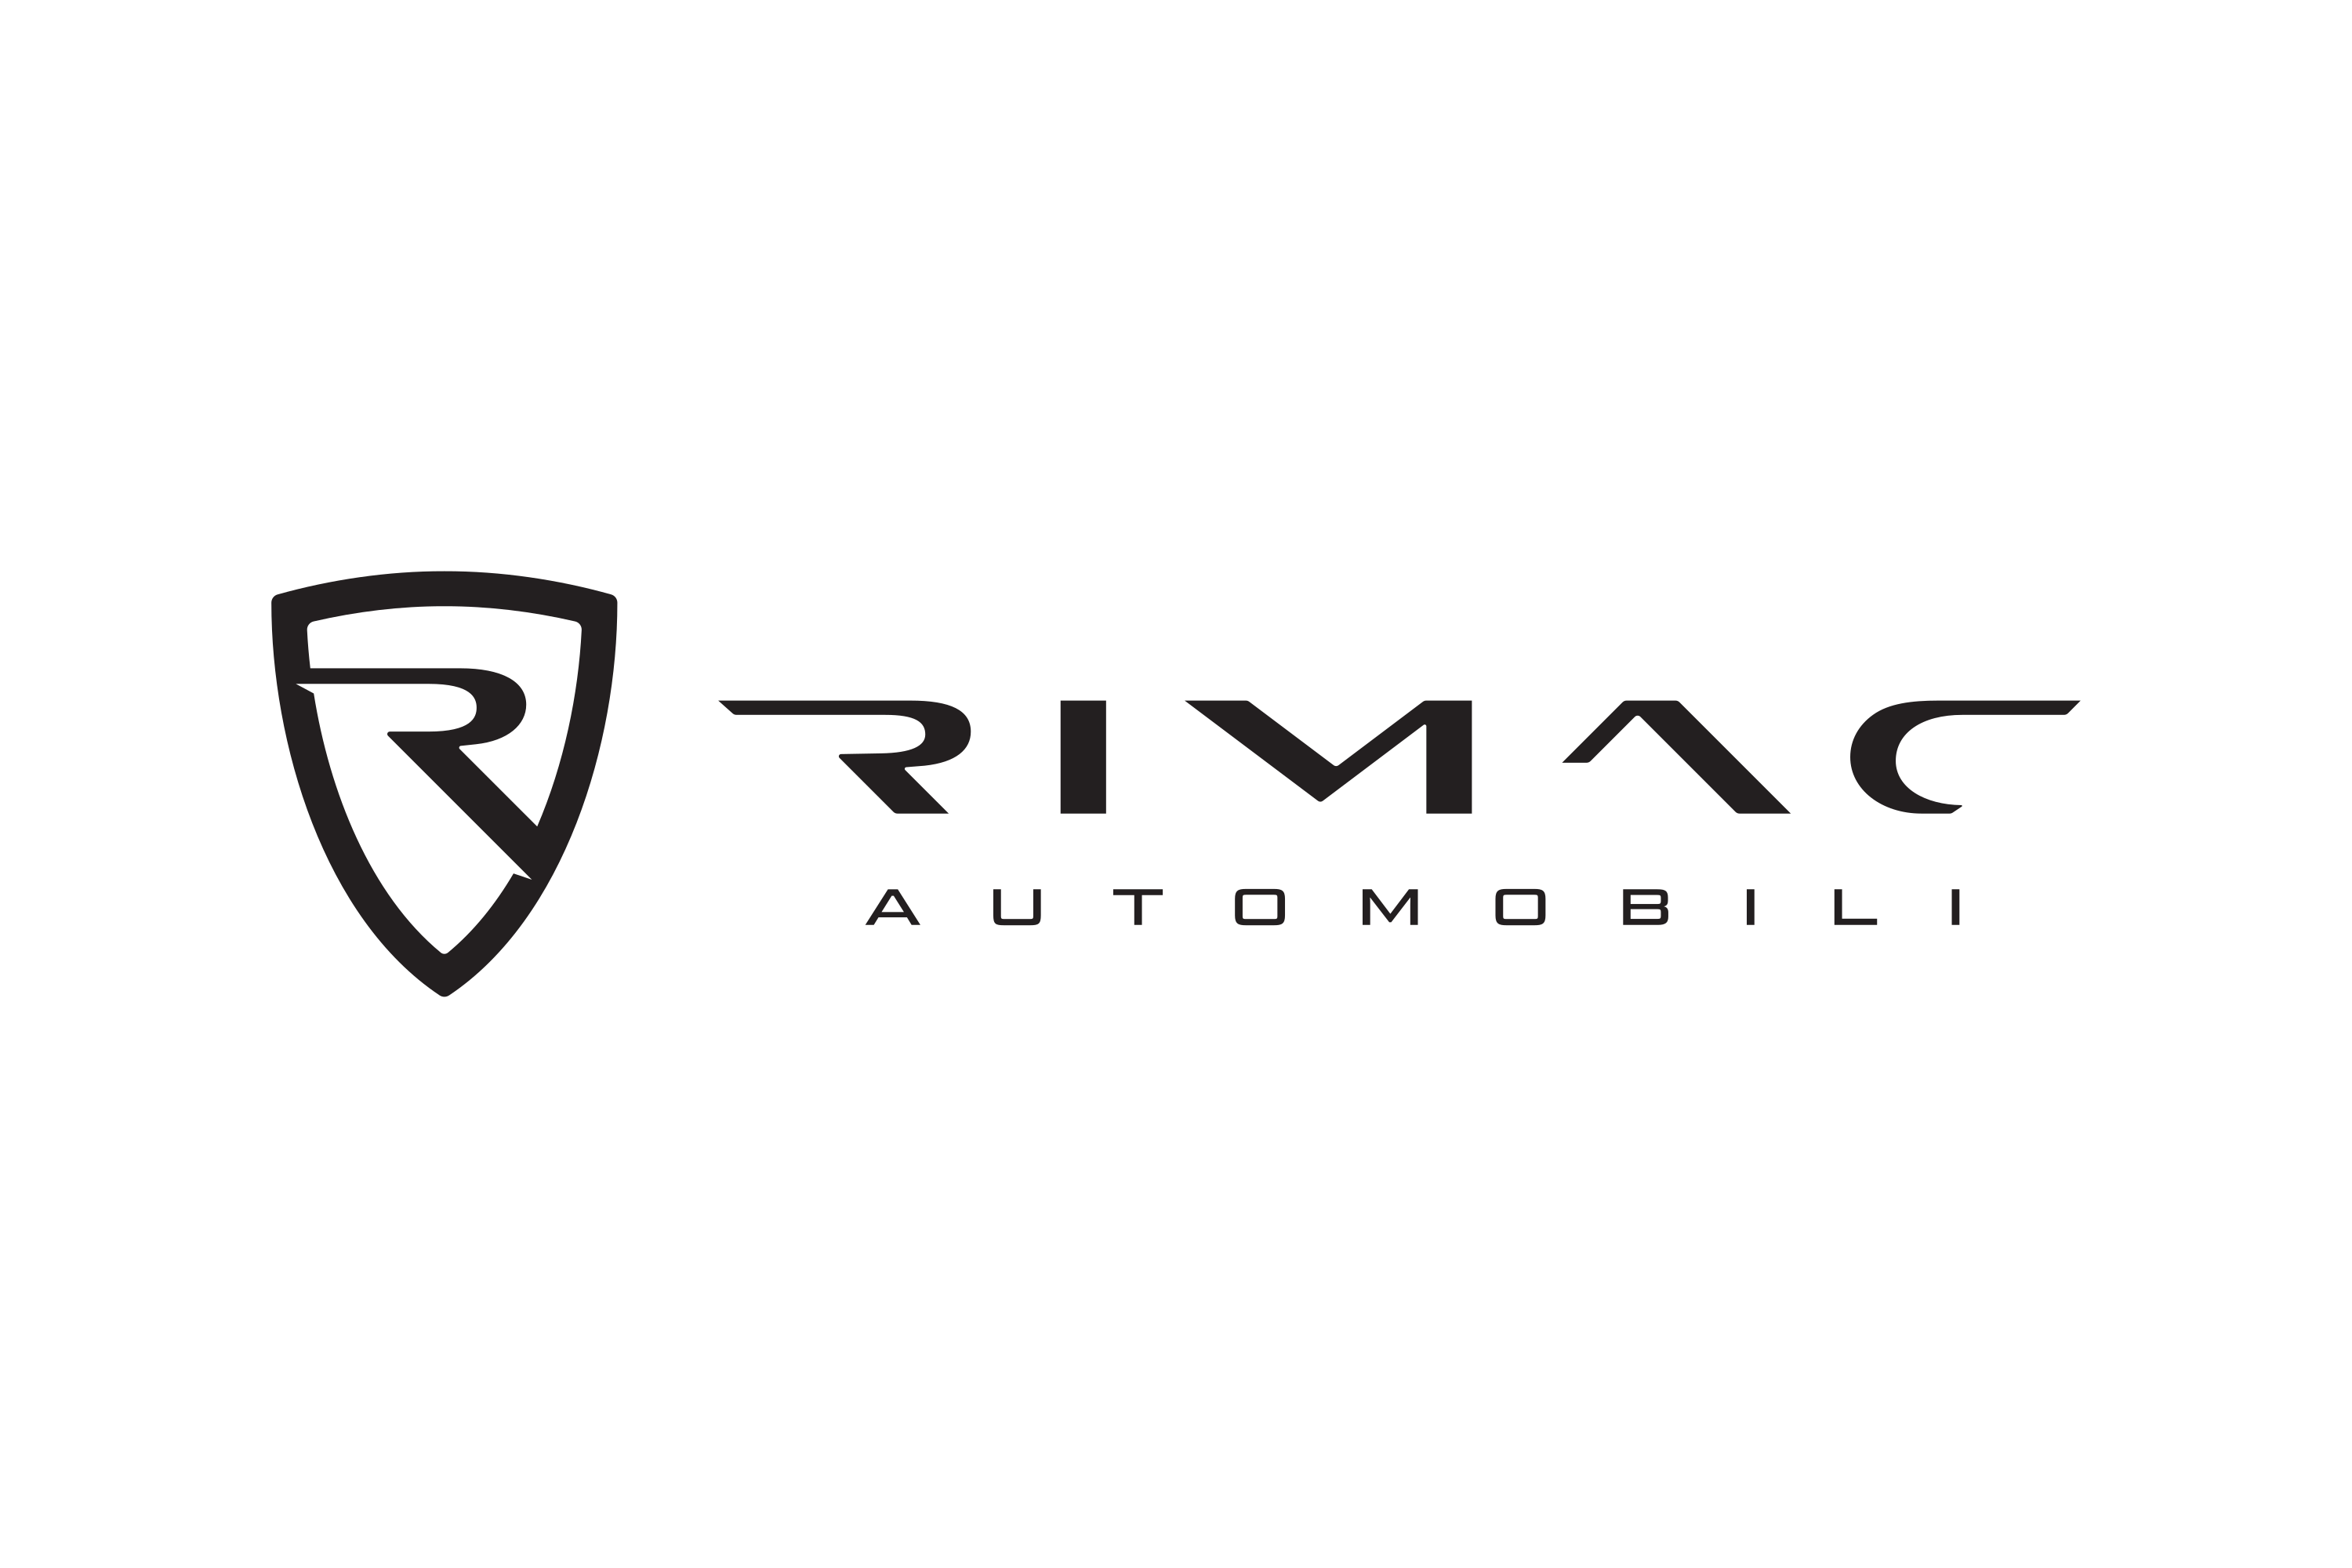 Download Rimac Automobili Logo in SVG Vector or PNG File Format - Logo.wine